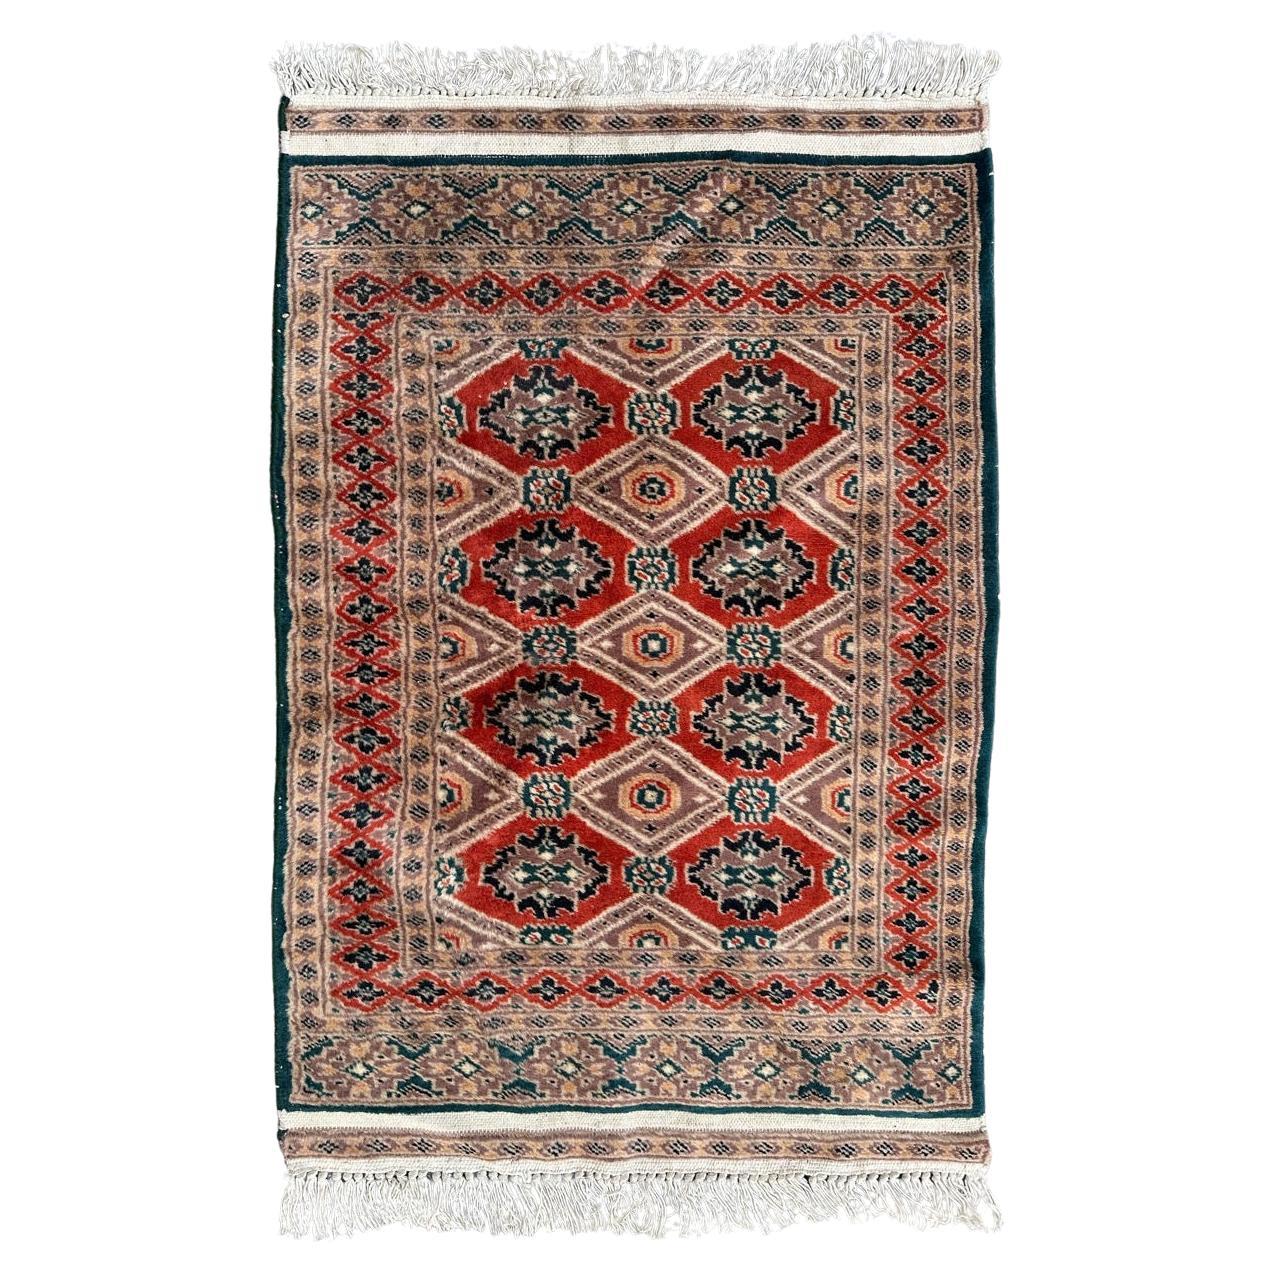 Bobyrug’s pretty small vintage Pakistani rug